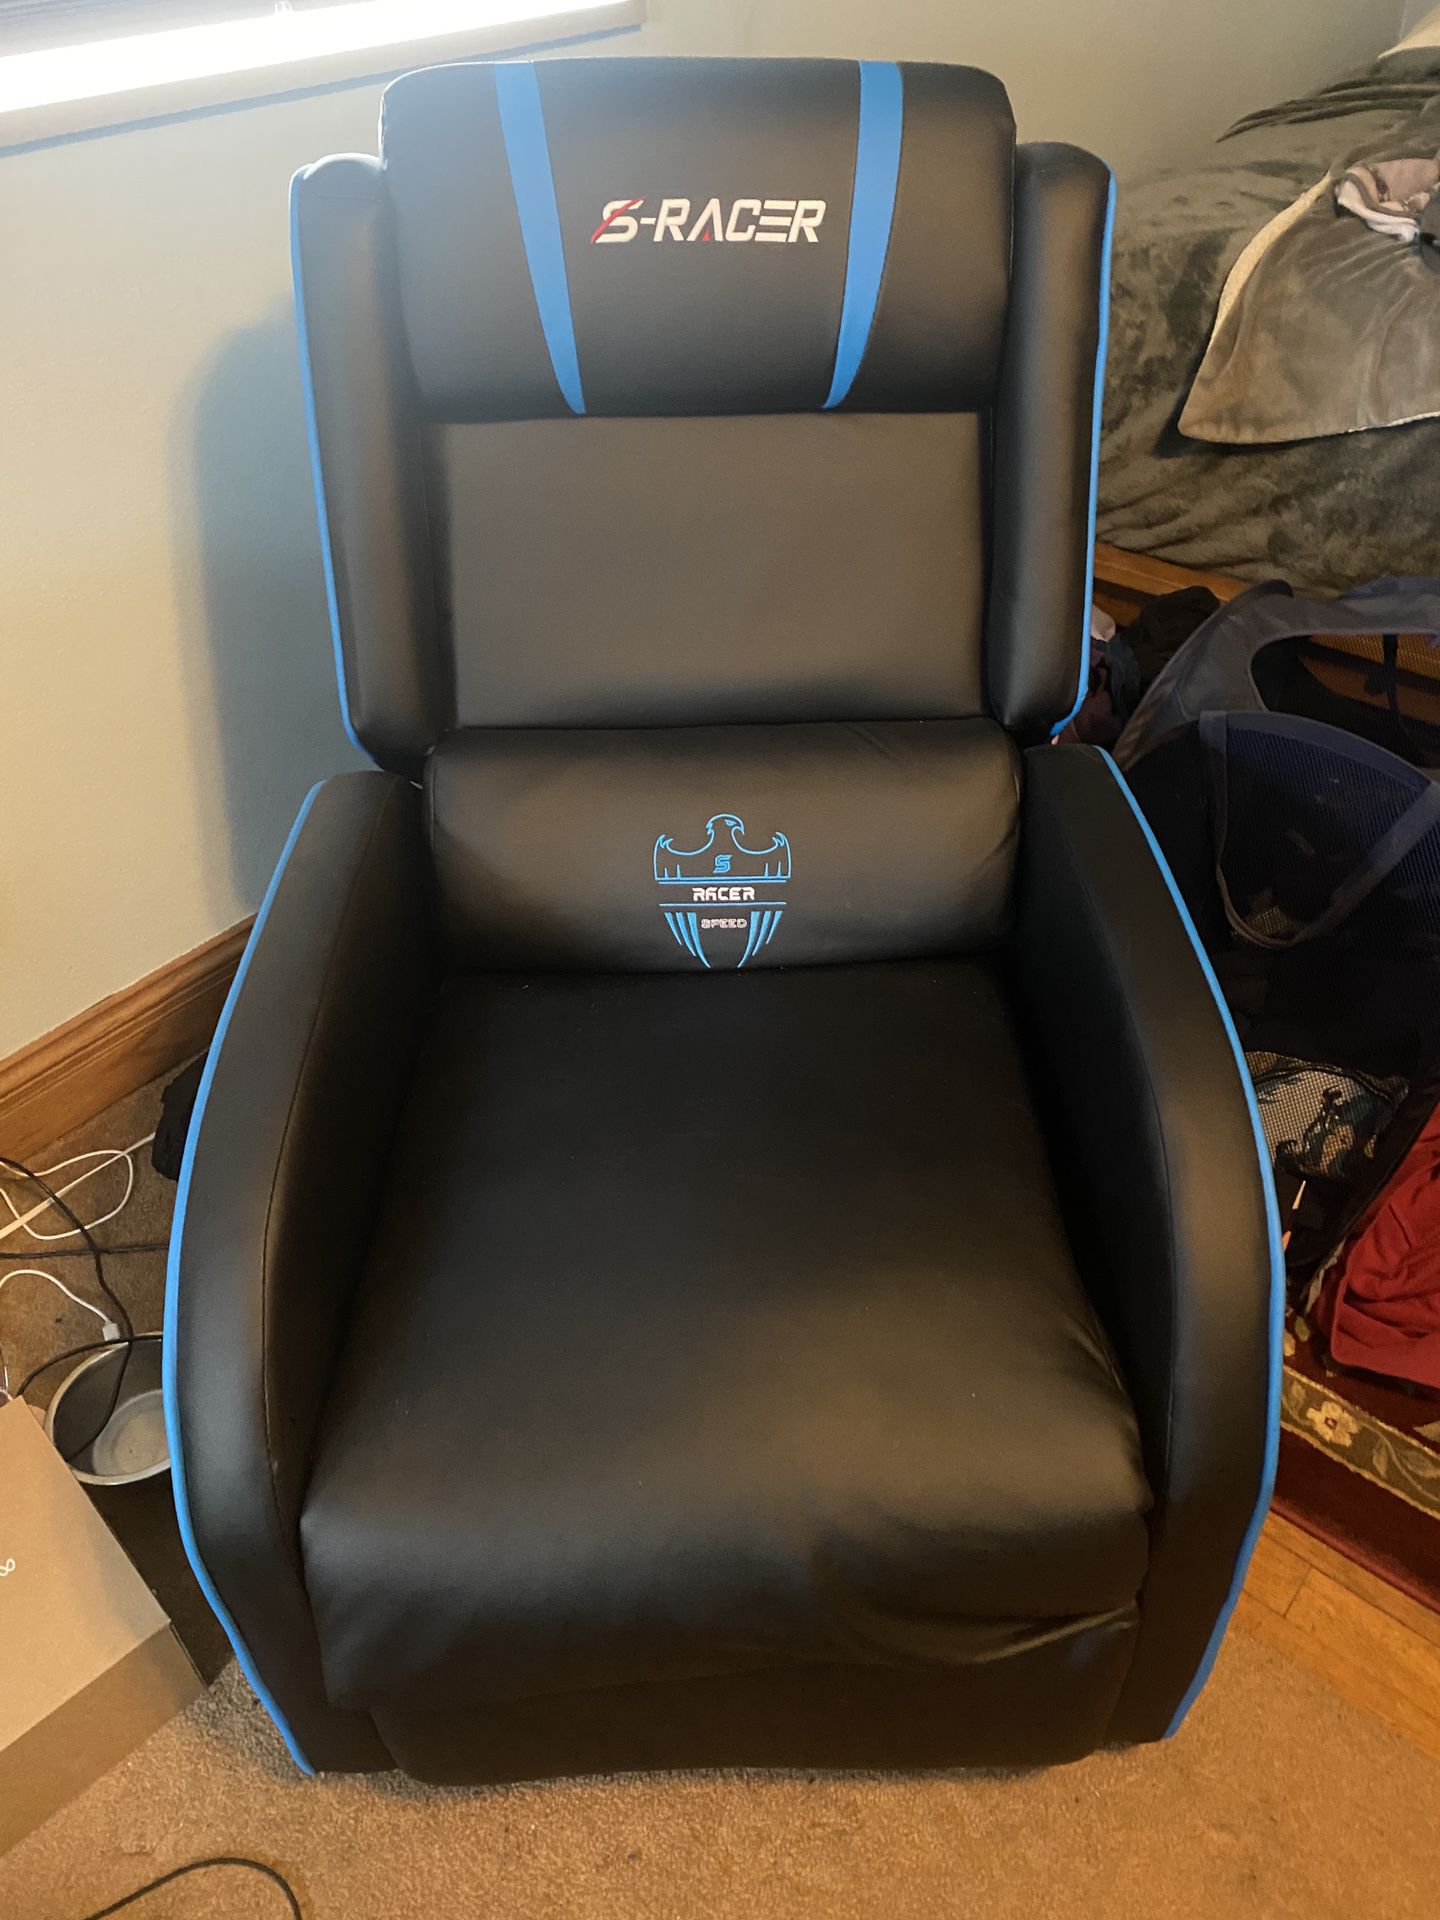 Homall Massage Gaming Recliner Chair (Blue)